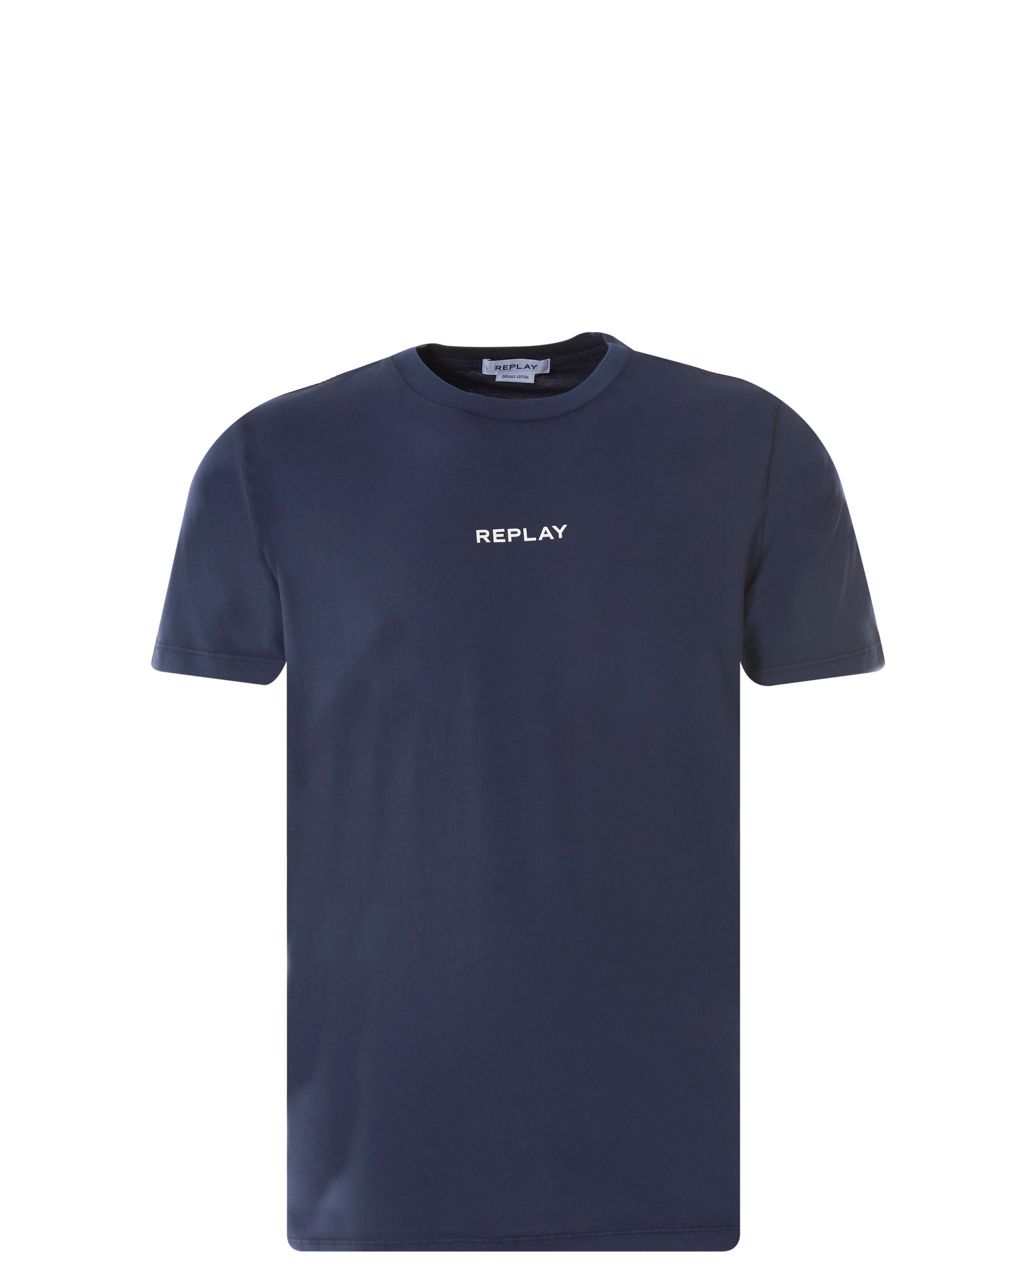 Replay T-shirt KM Donker blauw 078255-001-L